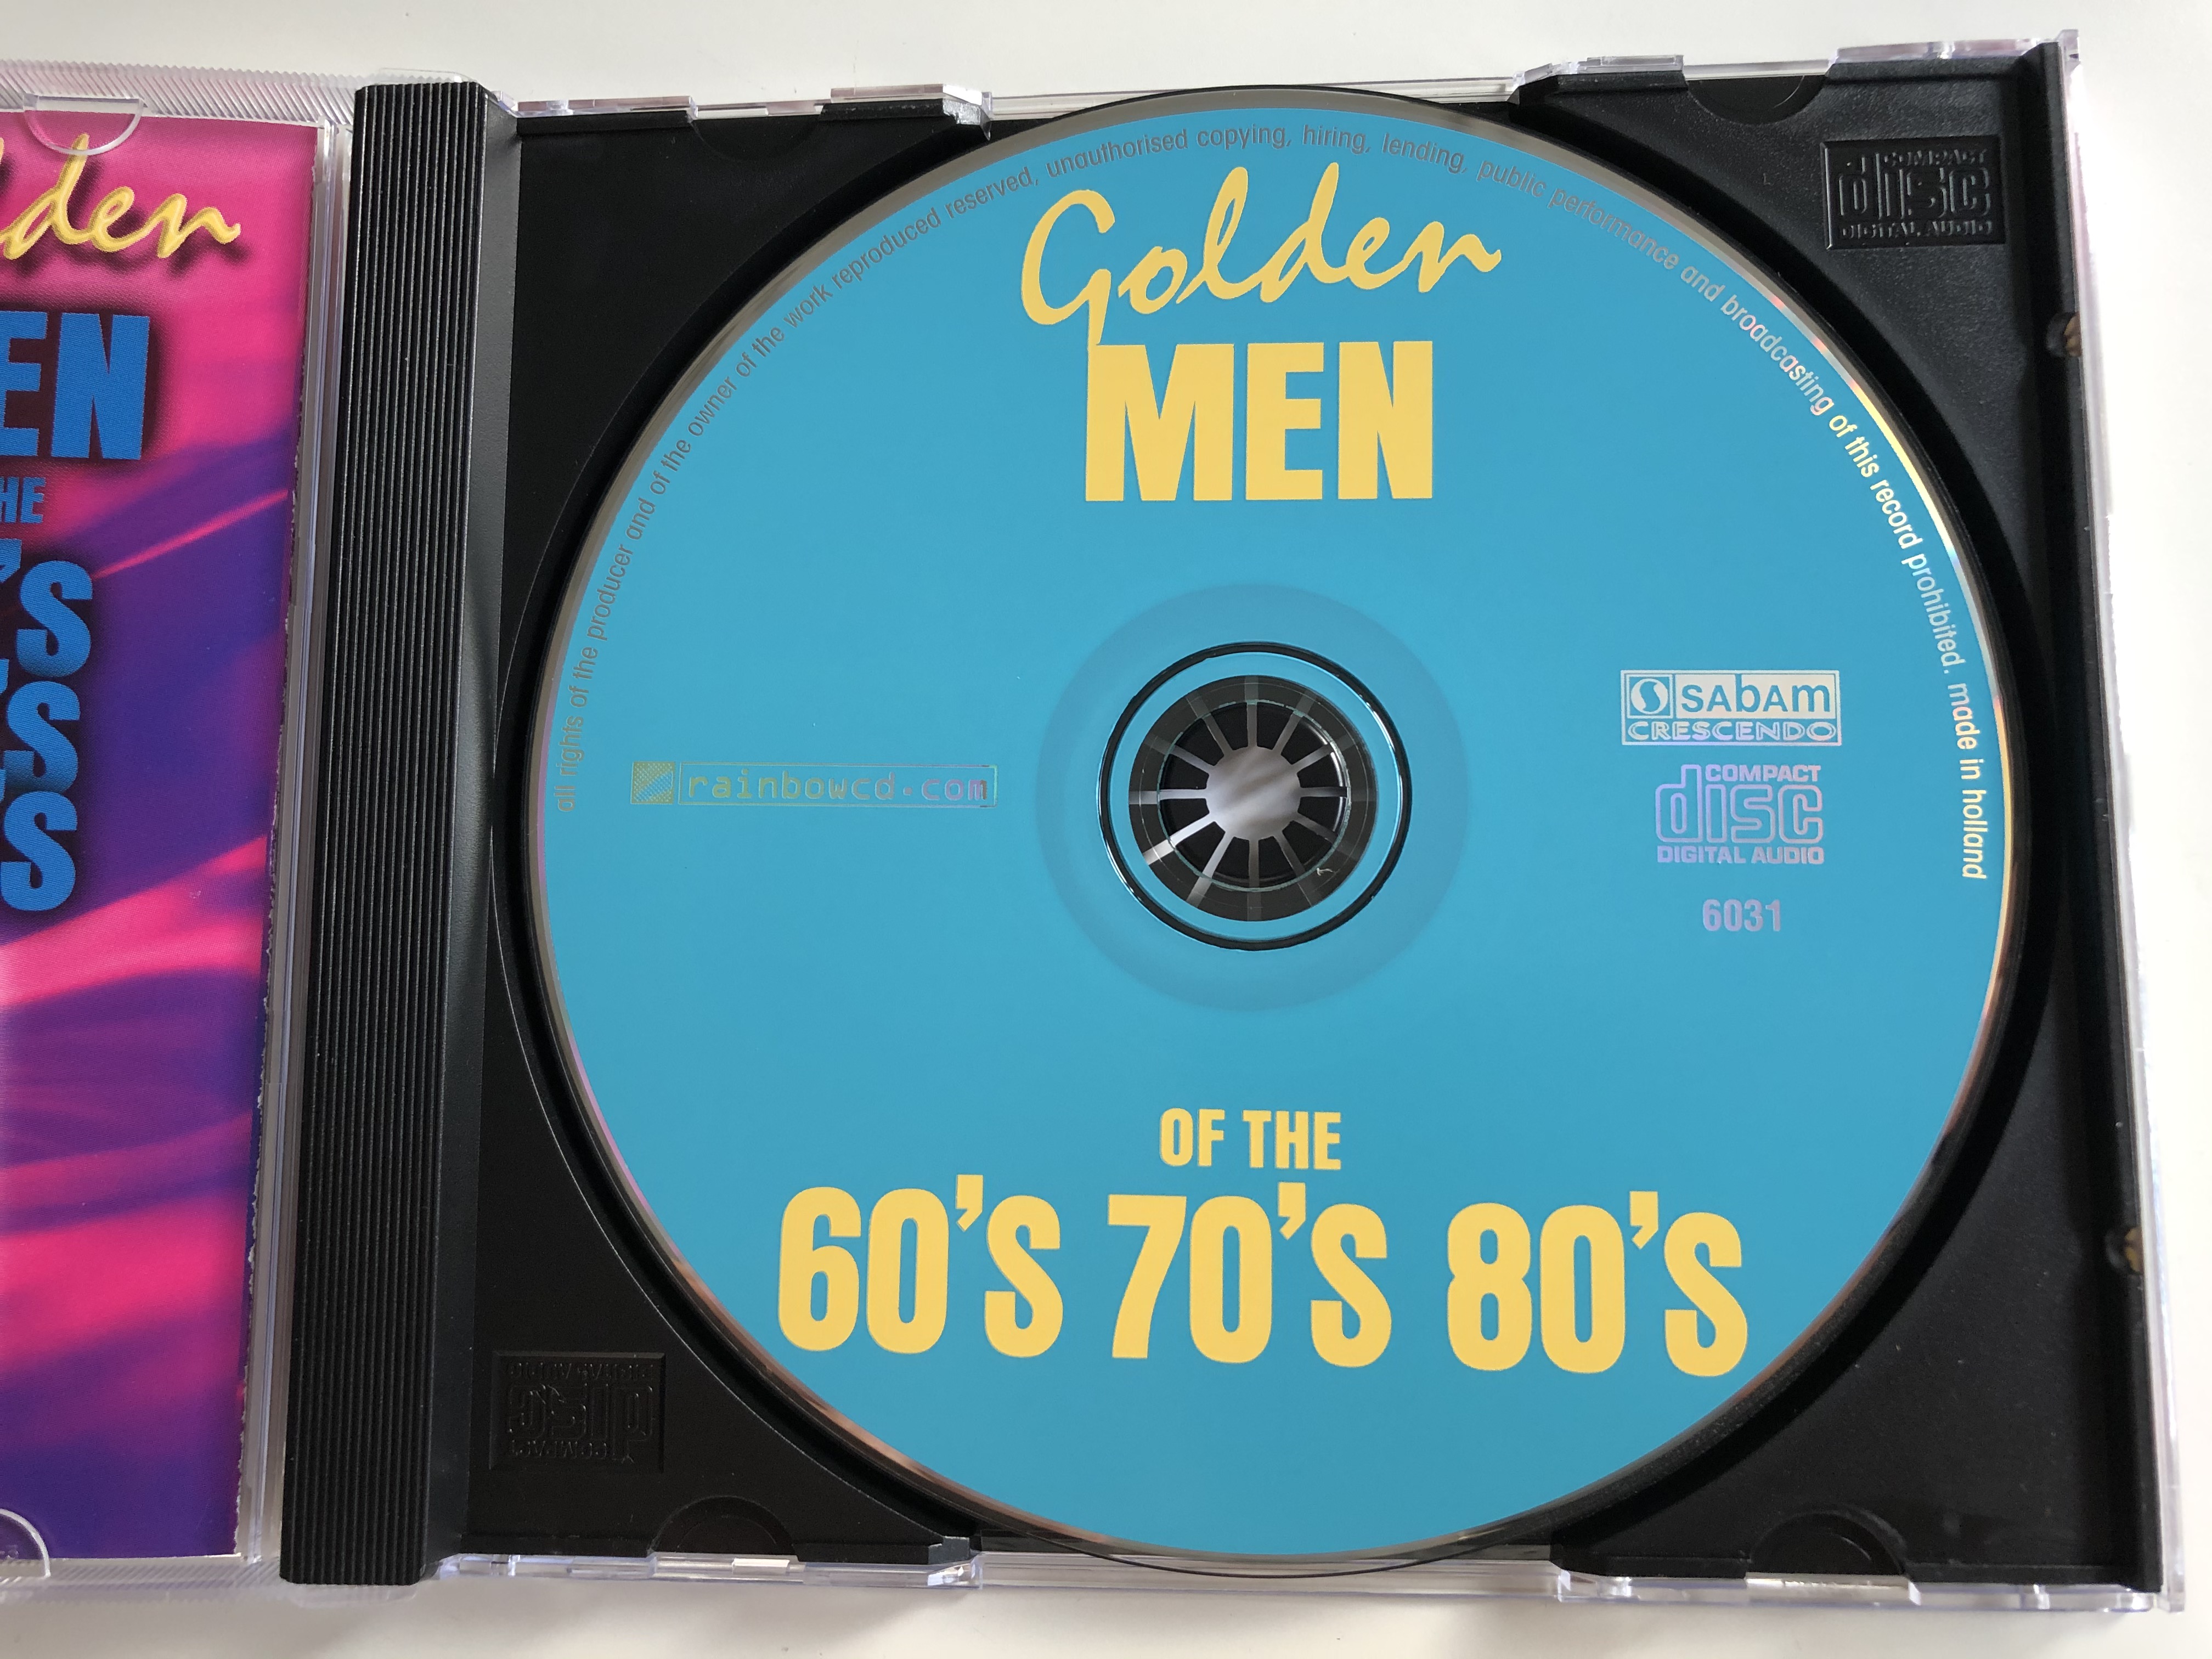 golden-men-of-the-60-s-70-s-80-s-cd2-tavares-kenny-rogers-john-travolta-donovan-christie-and-many-more-point-entertainment-ltd.-audio-cd-1999-6031-3-.jpg